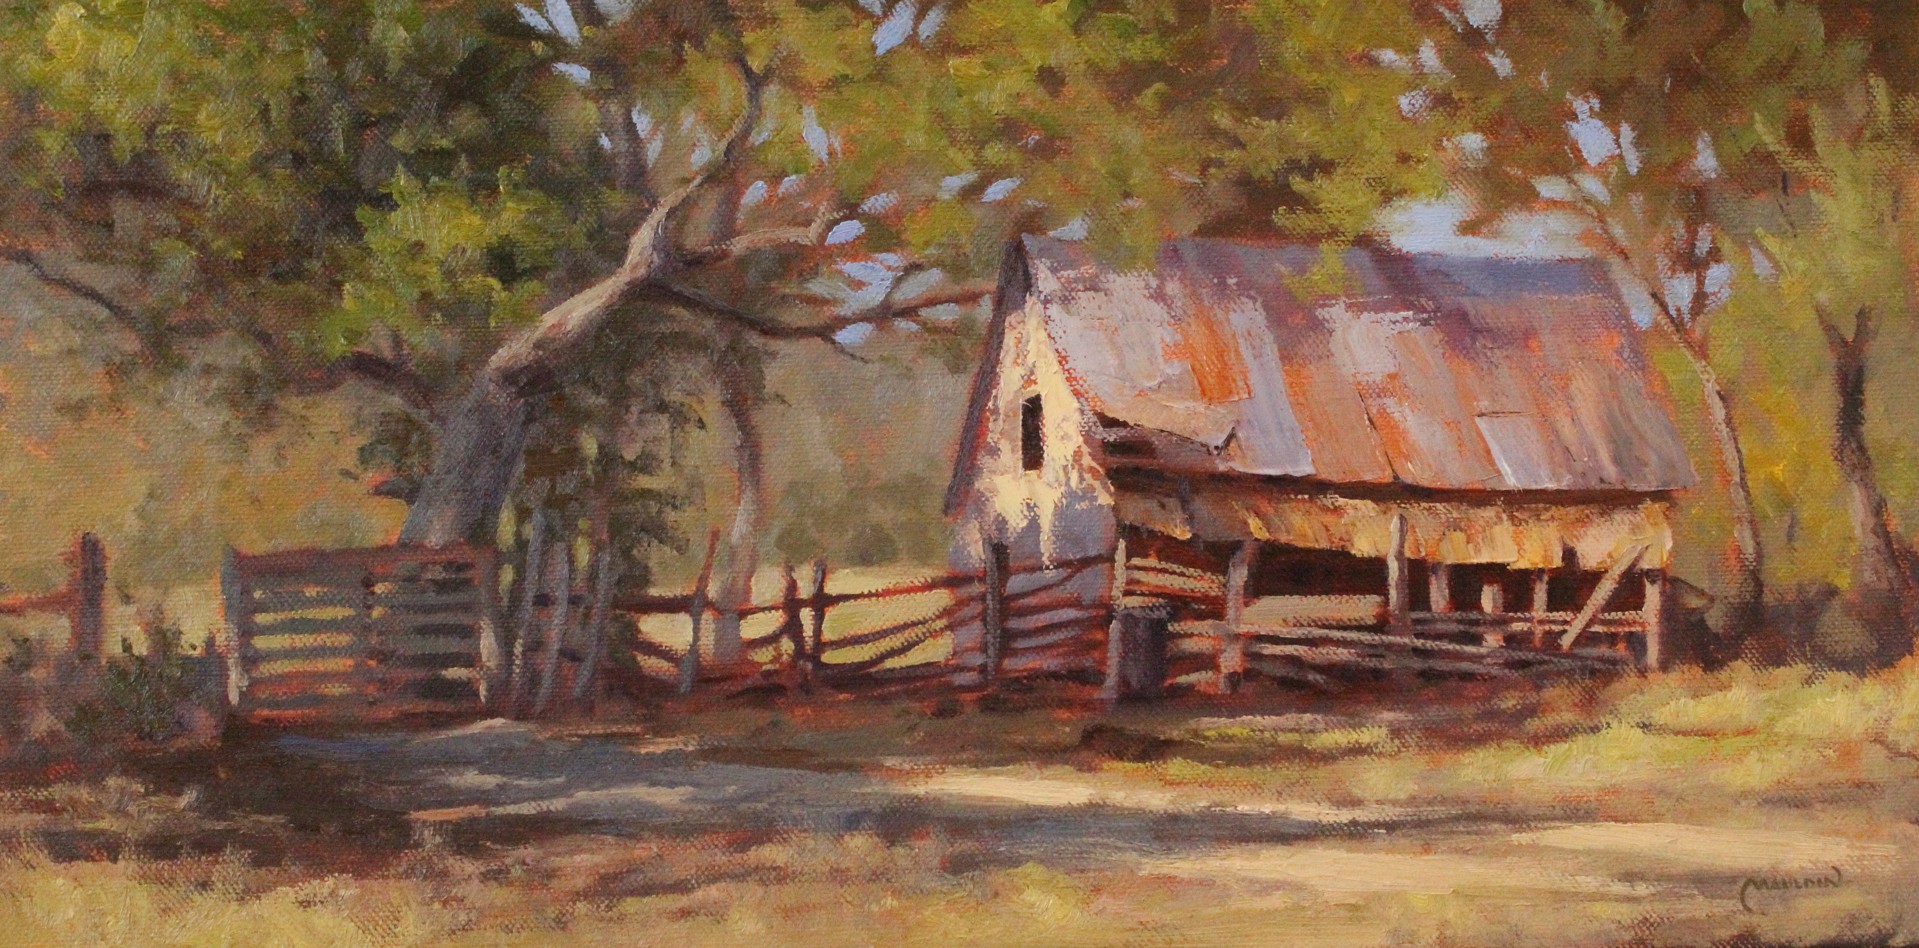 The Leaning Barn of Glen Rose by Chuck Mauldin